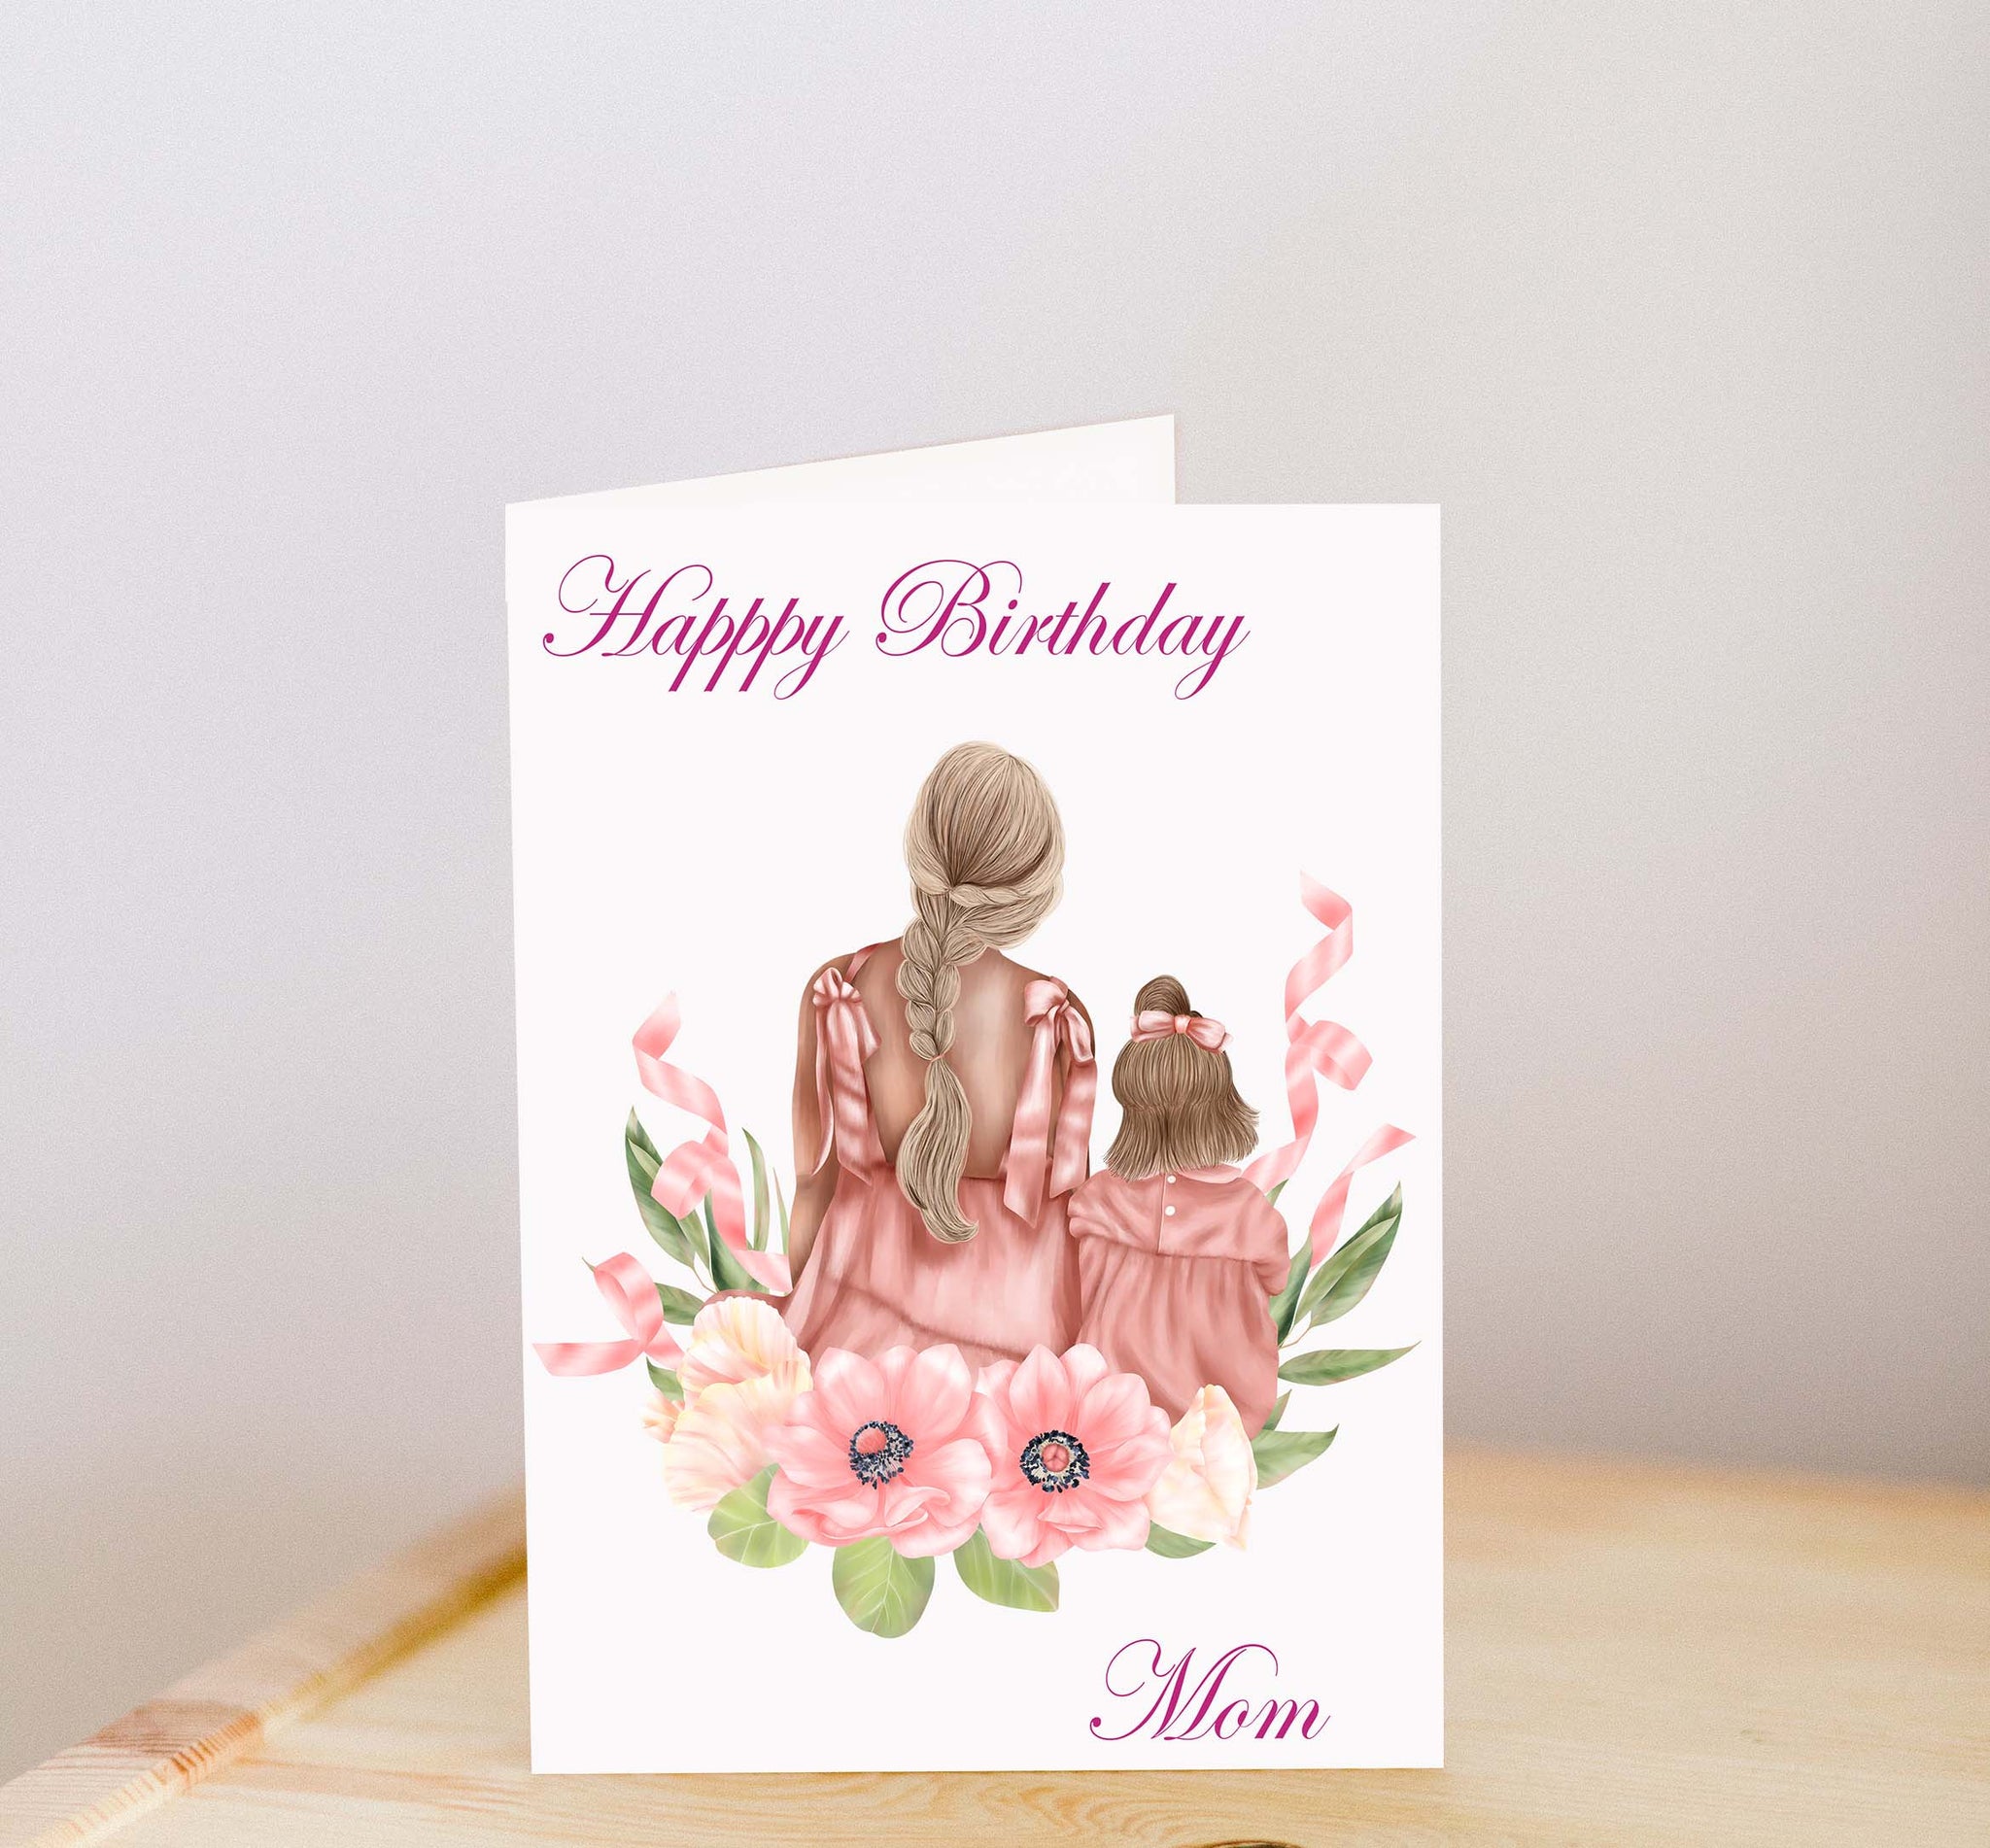 happy birthday mom card drawings